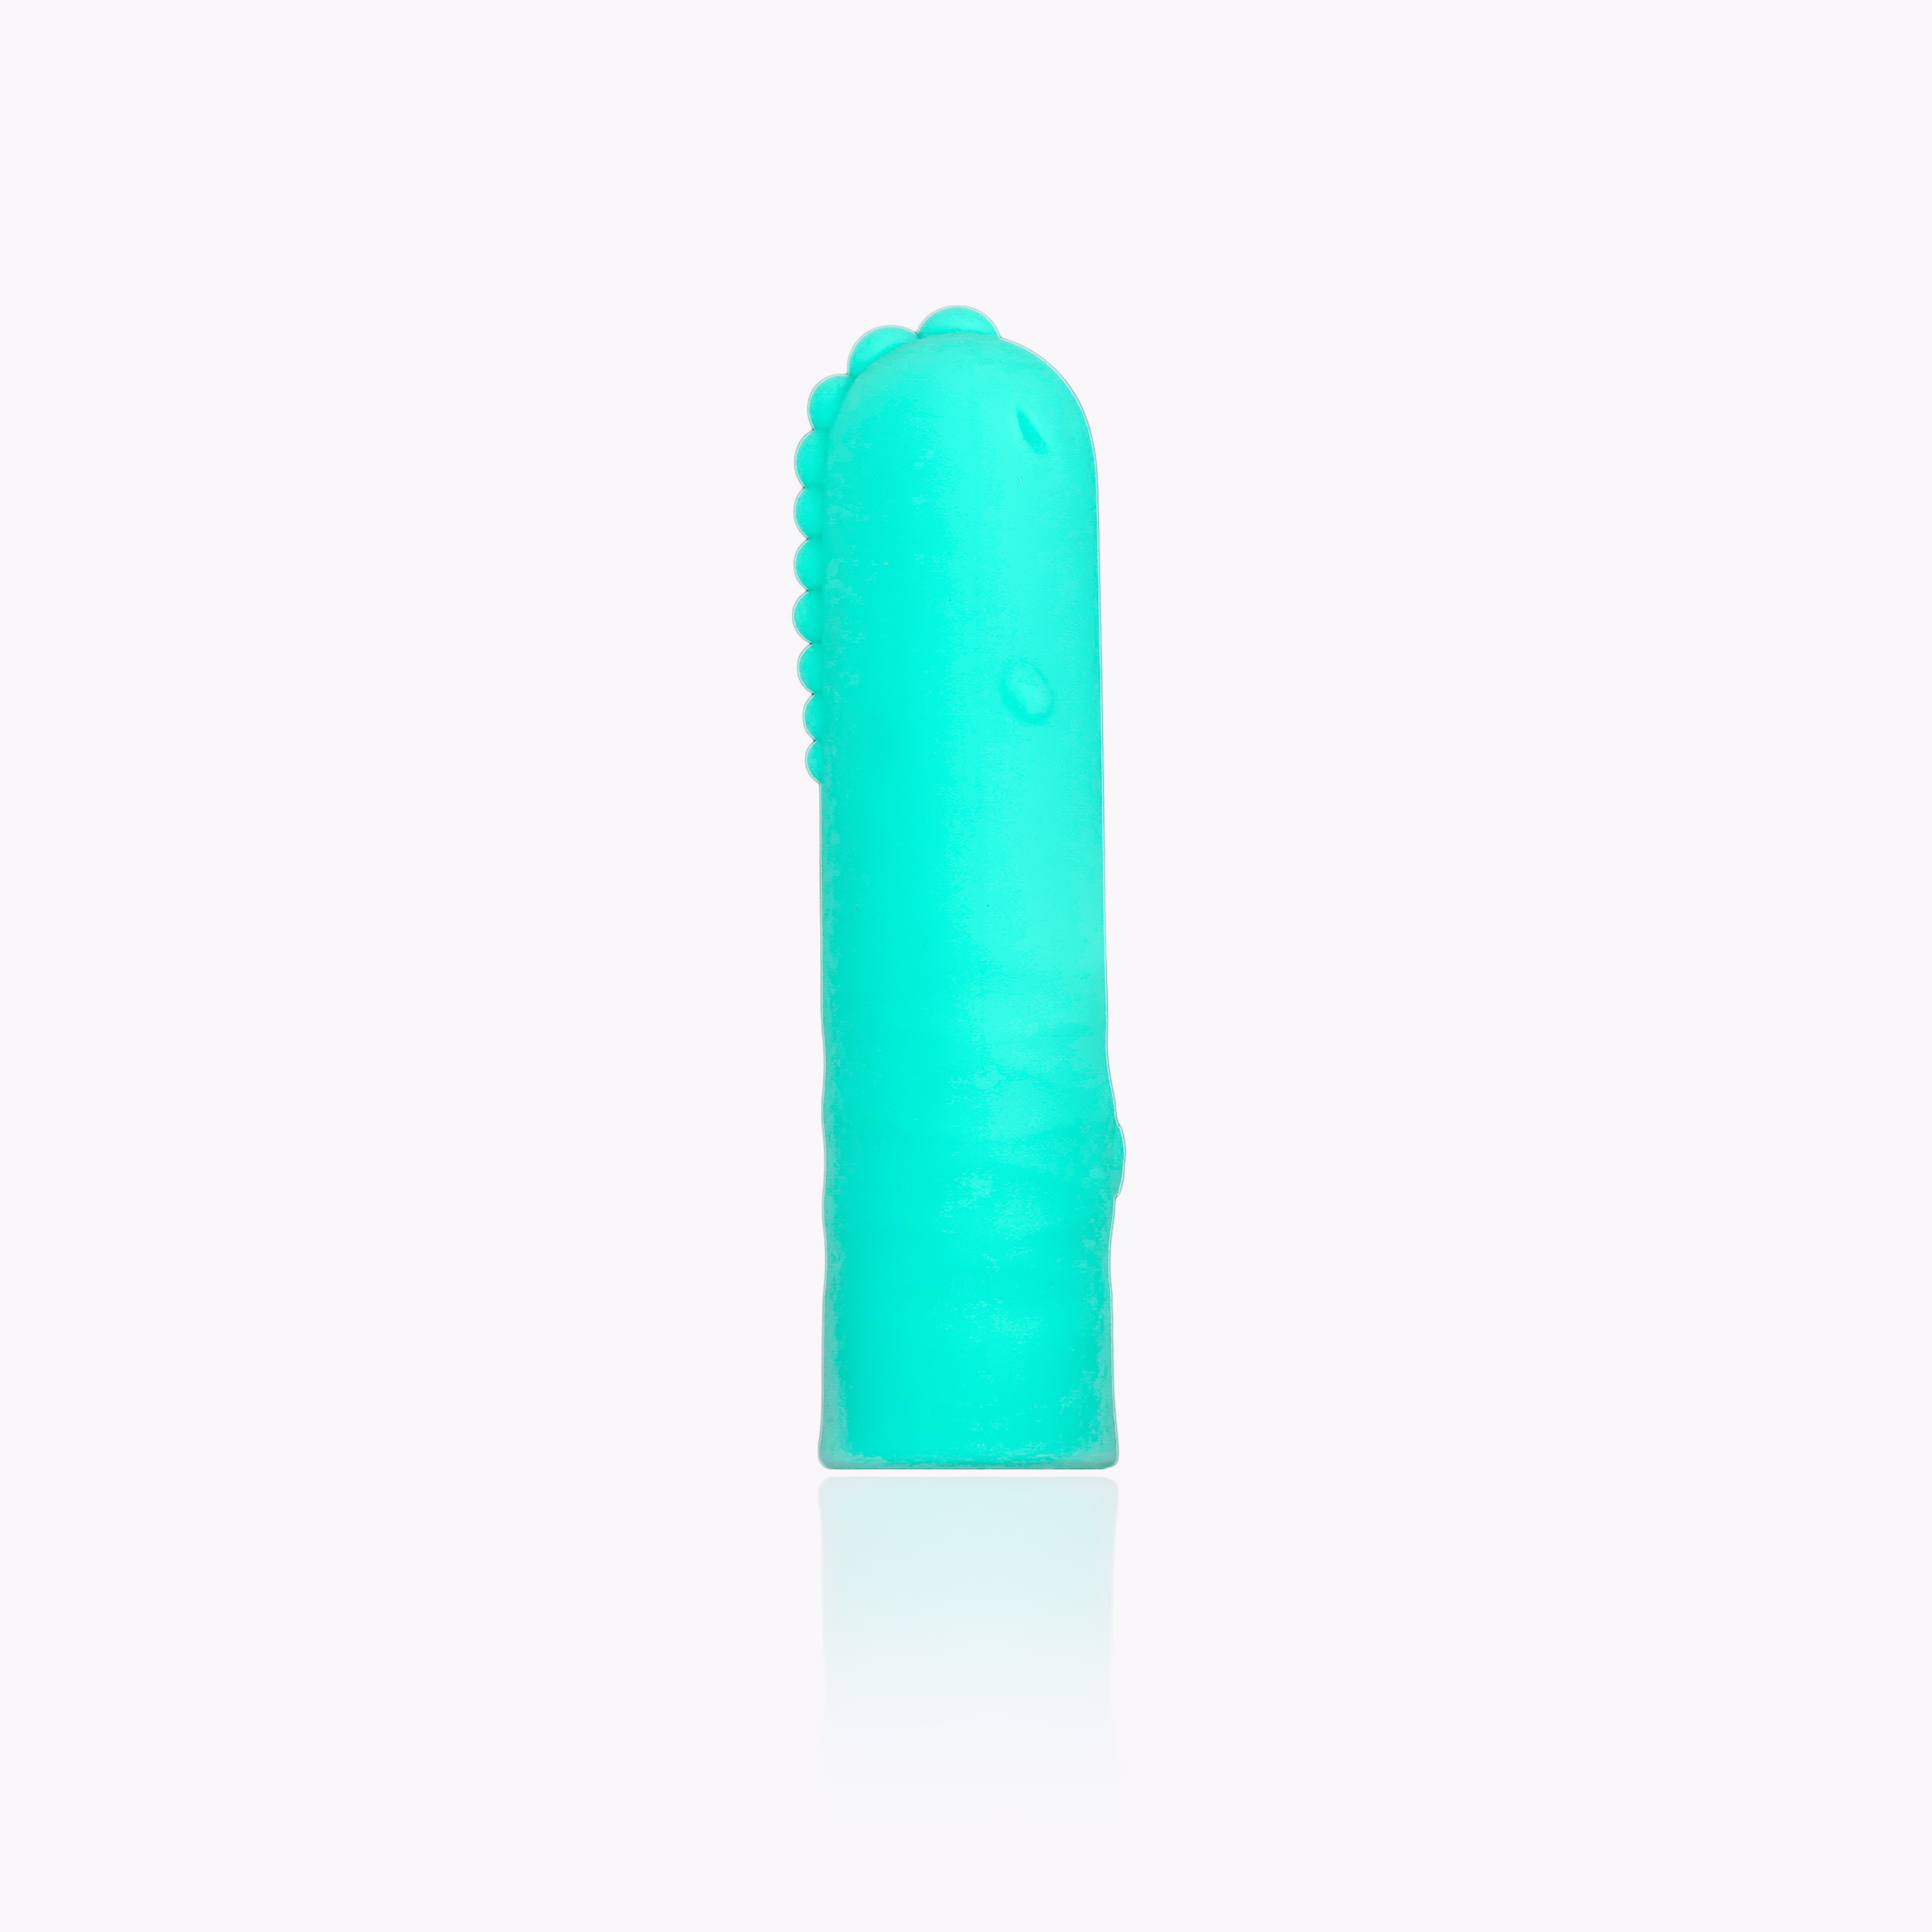 Gizli Sekme Morty mini vibra tor sex toy kullanma kılavuzu.